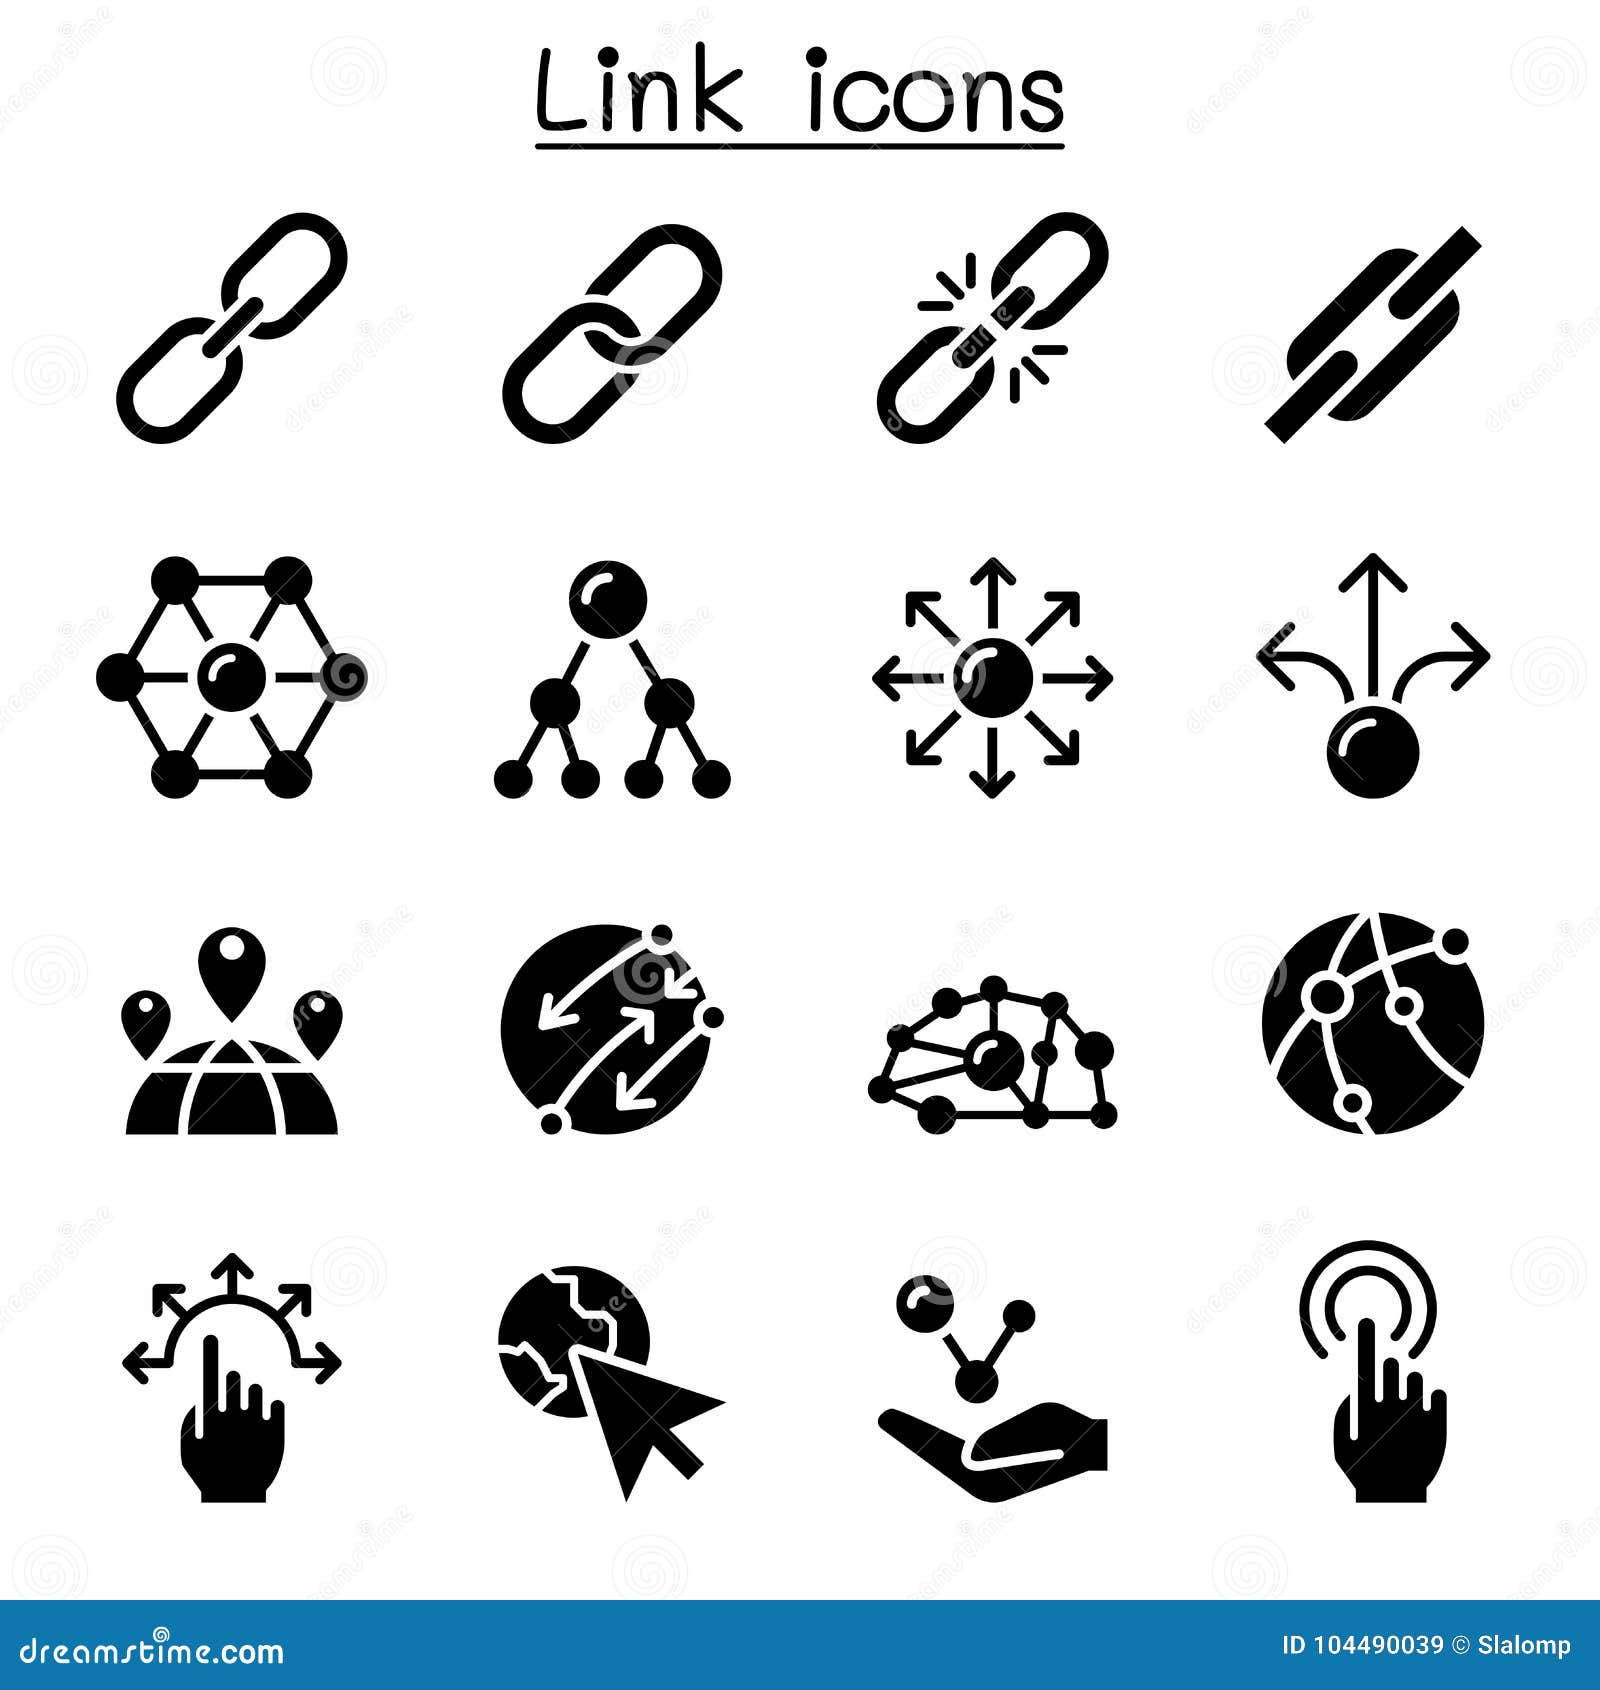 link icon set